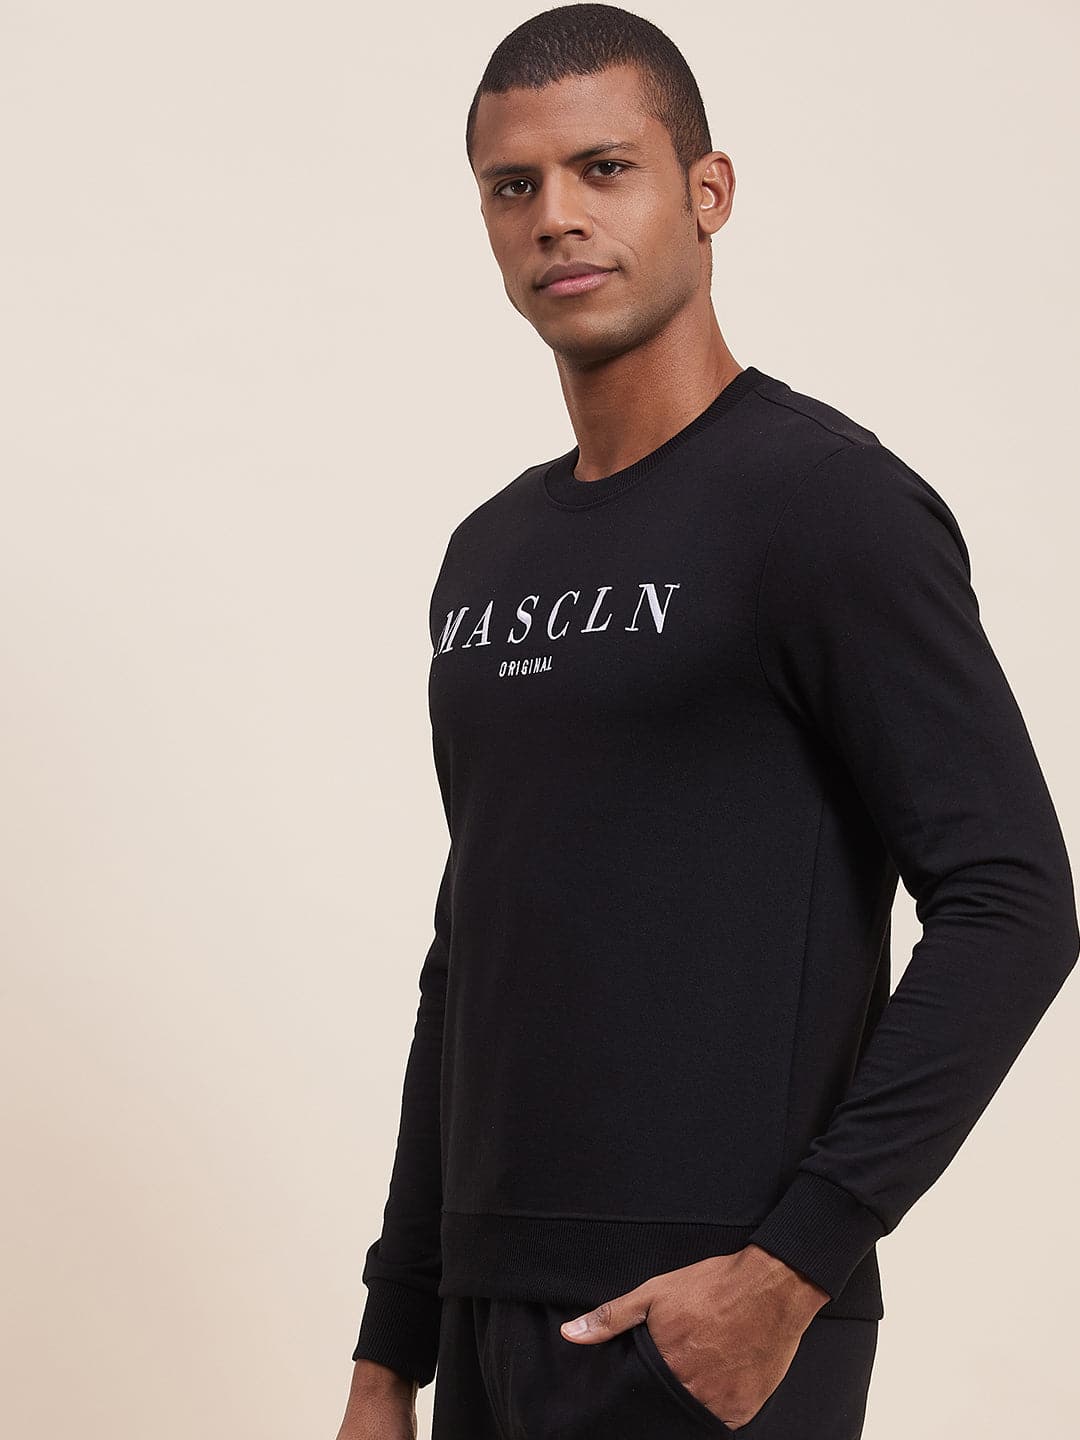 Men's Black MASCLN Embroidered Sweatshirt - LYUSH-MASCLN